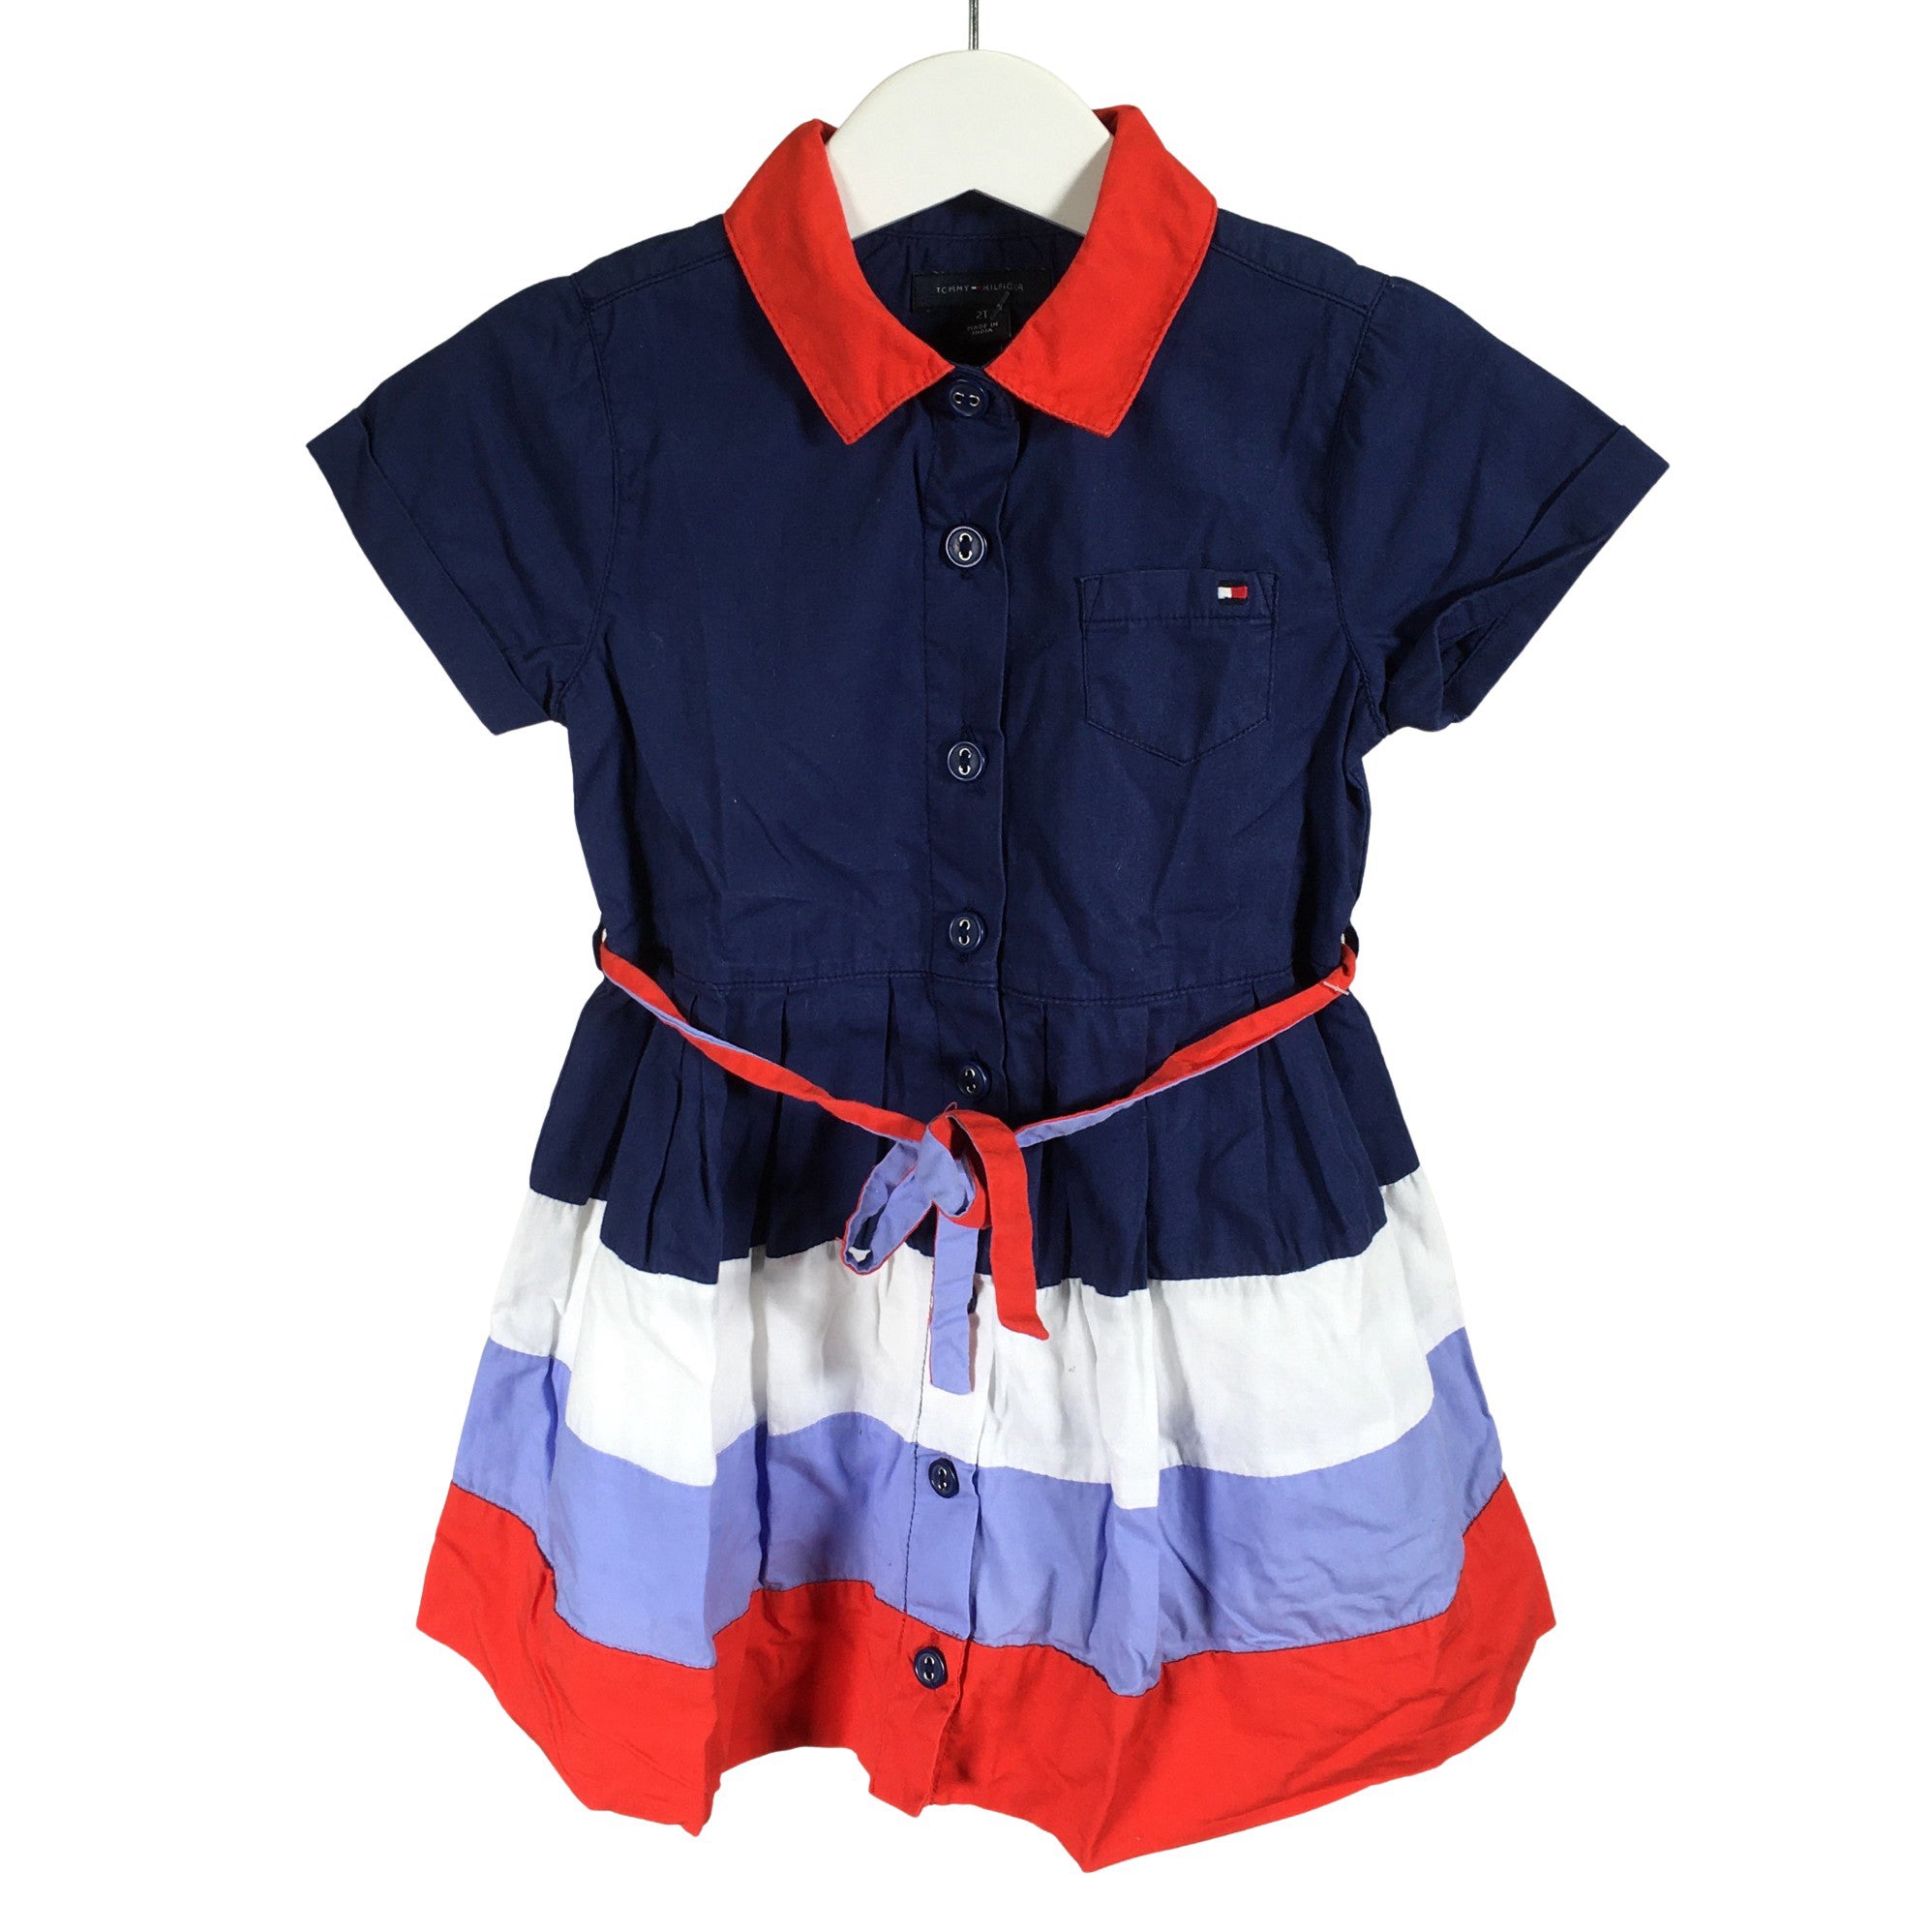 Girls' Tommy Hilfiger Dress, size 86 - 92 (Blue)